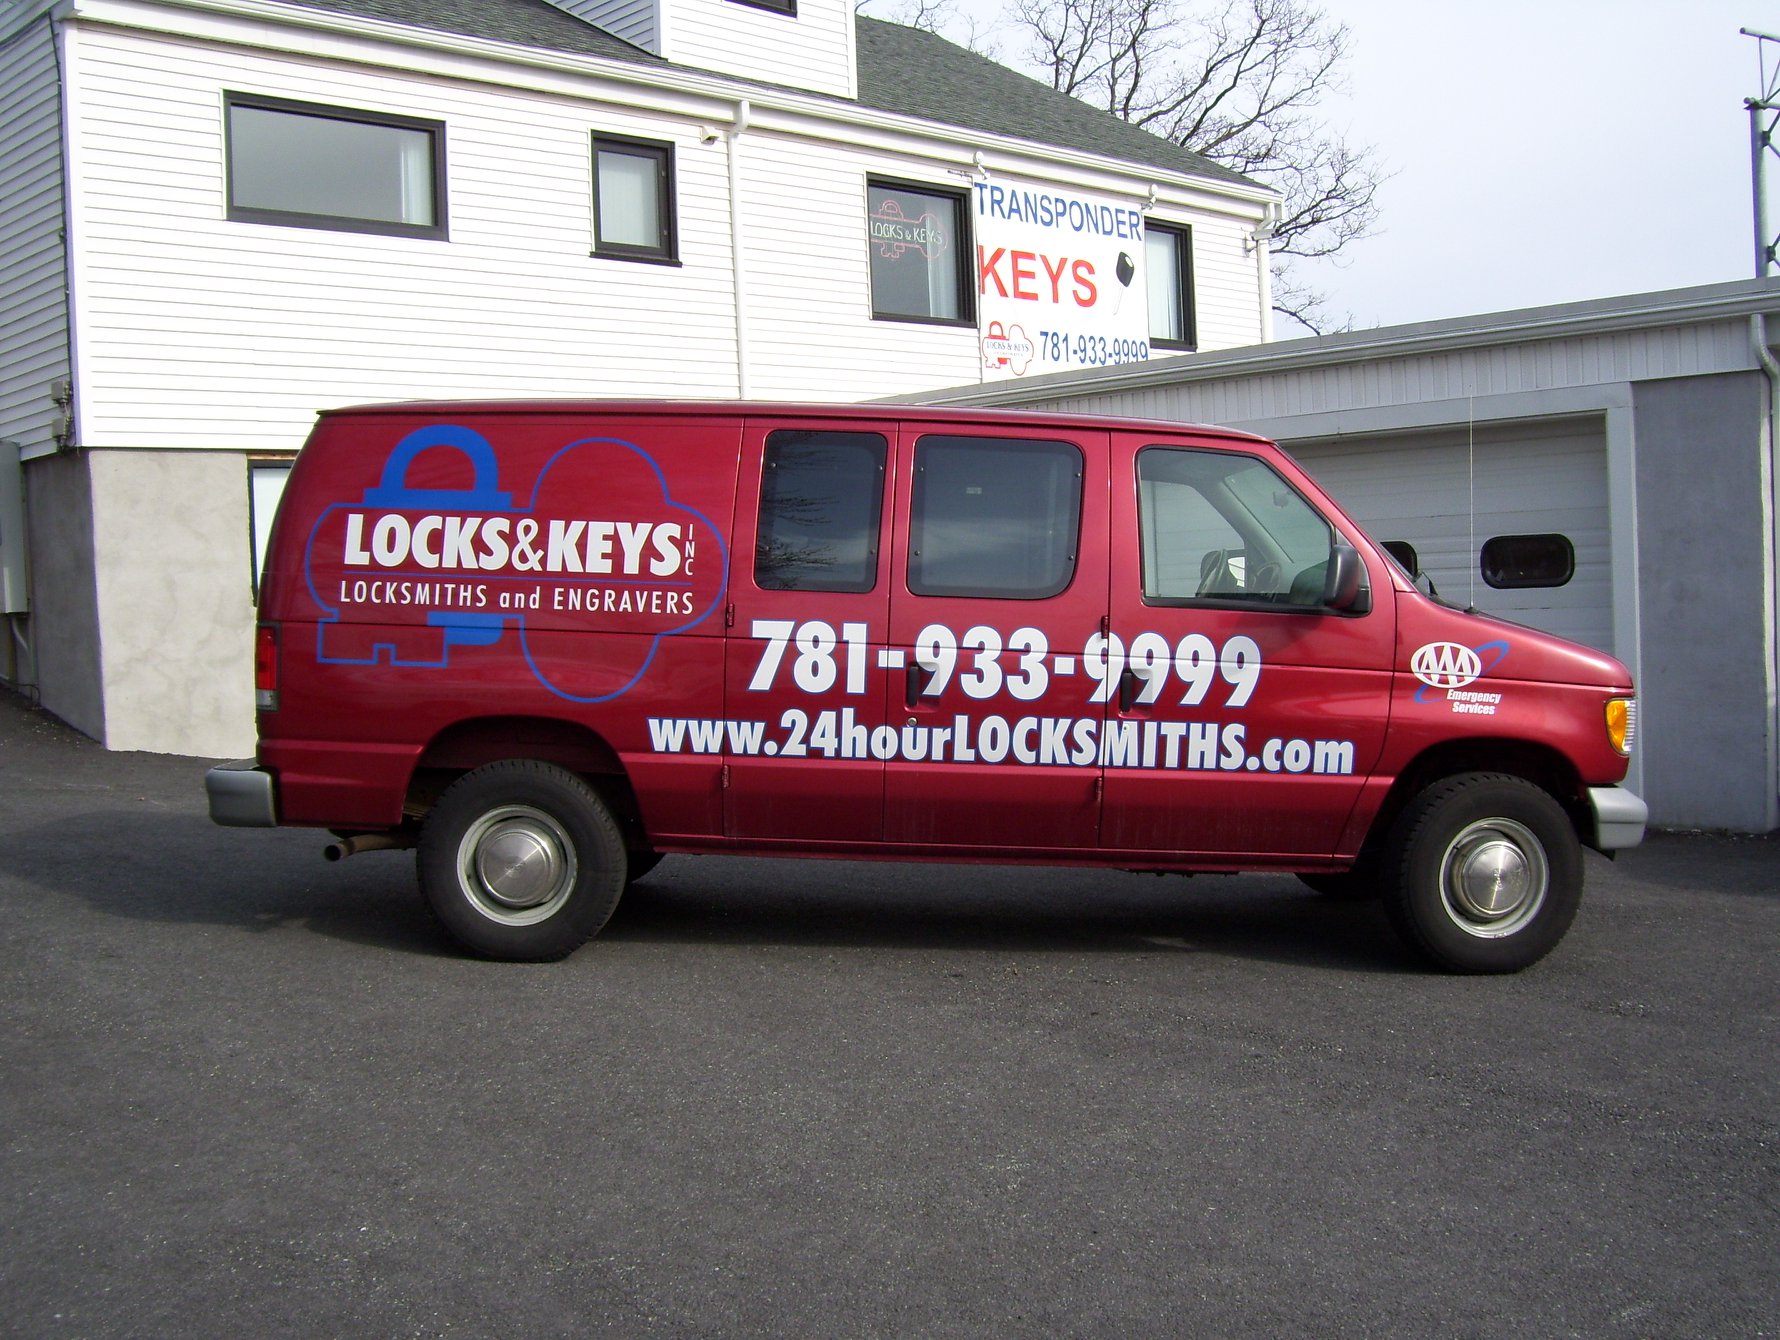 Locks & Keys Inc. - Emergency Services - Andover MA locksmith